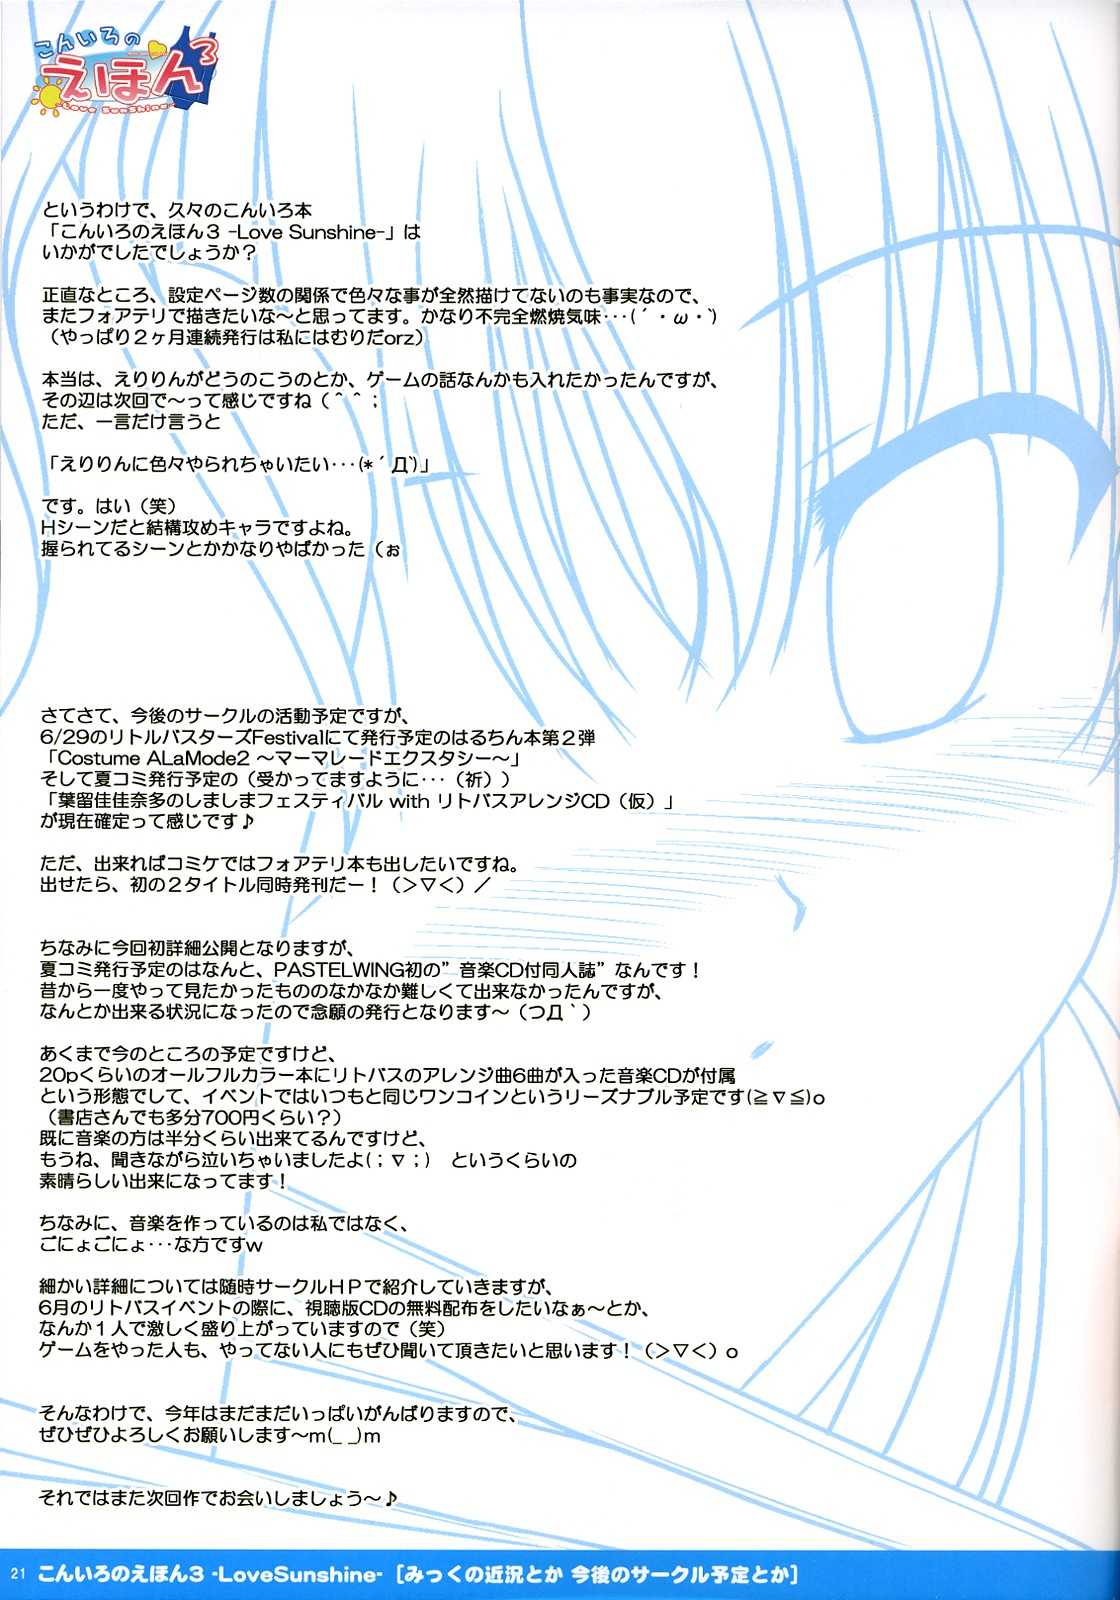 (COMIC1☆2)[PASTEL WING (Kisaragi-MIC)] Koniro no Ehon 3 -Love SunShine- (FORTUNE ARTERIAL, Original) (COMIC1☆2)[PASTEL WING (如月みっく)] こんいろのえほん 3 -Love Sunshine- (FORTUNE ARTERIAL, オリジナル)